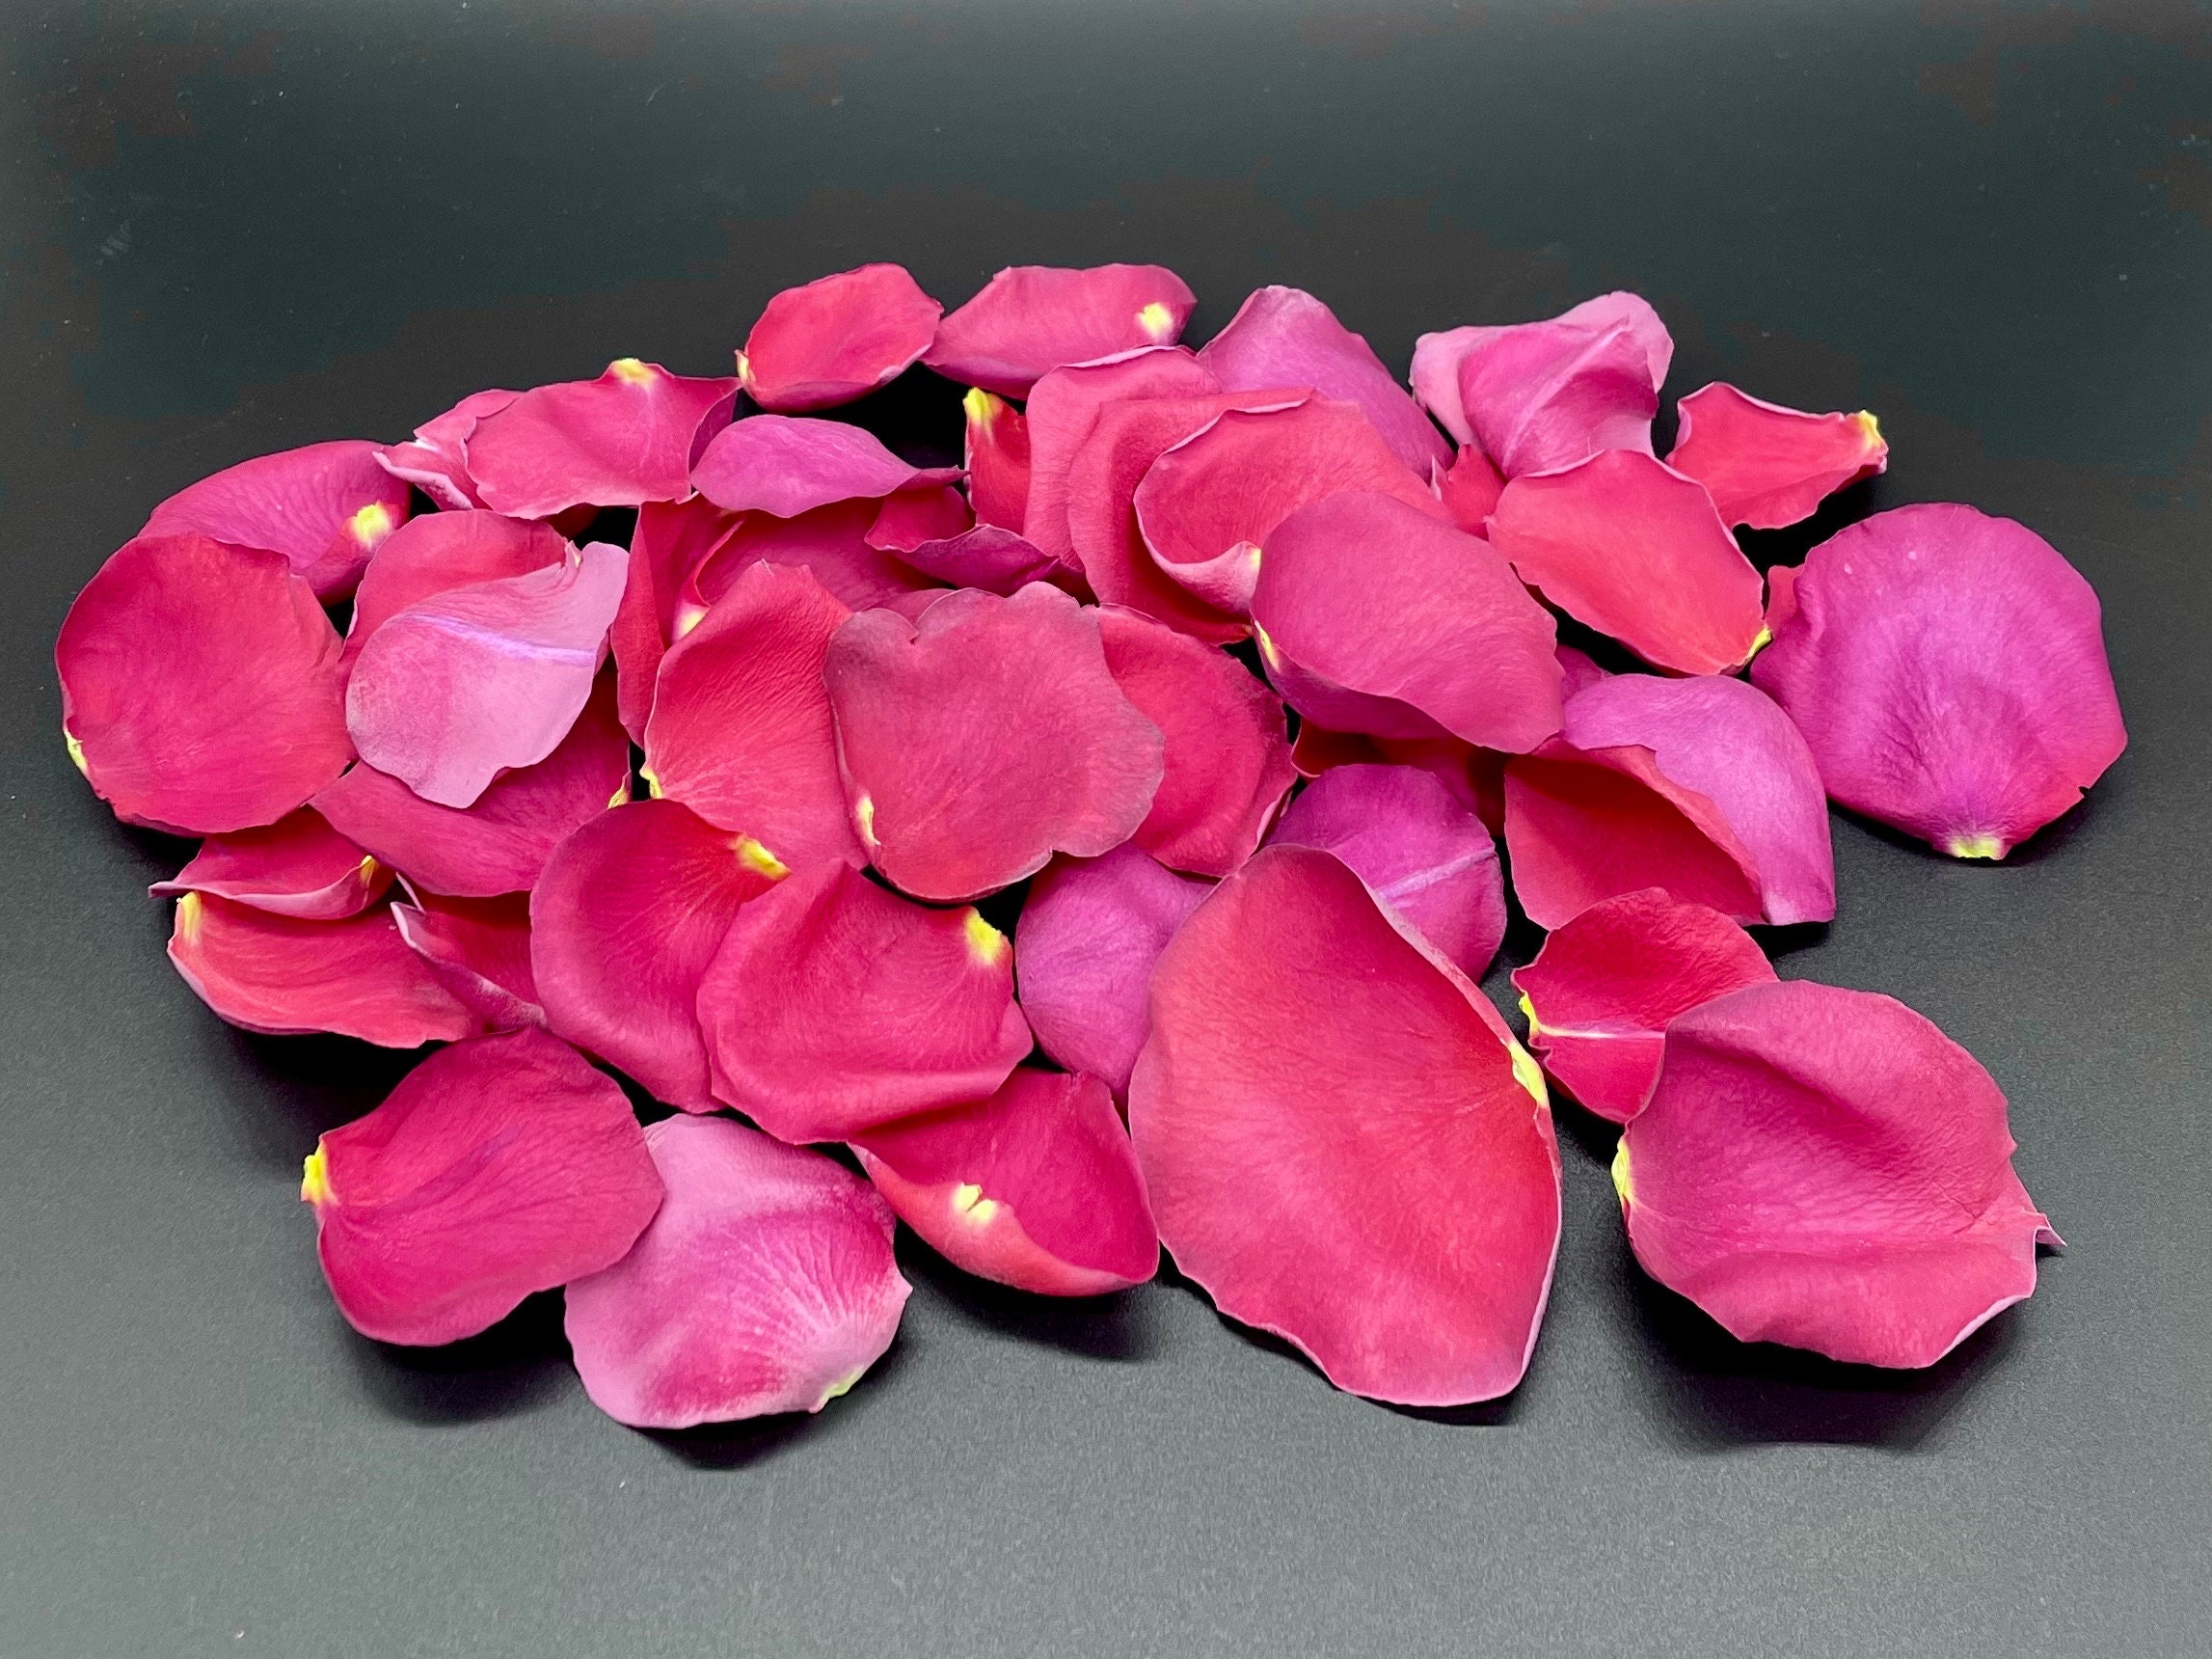 Fuchsia Pink Rose Petals, 300 Pieces